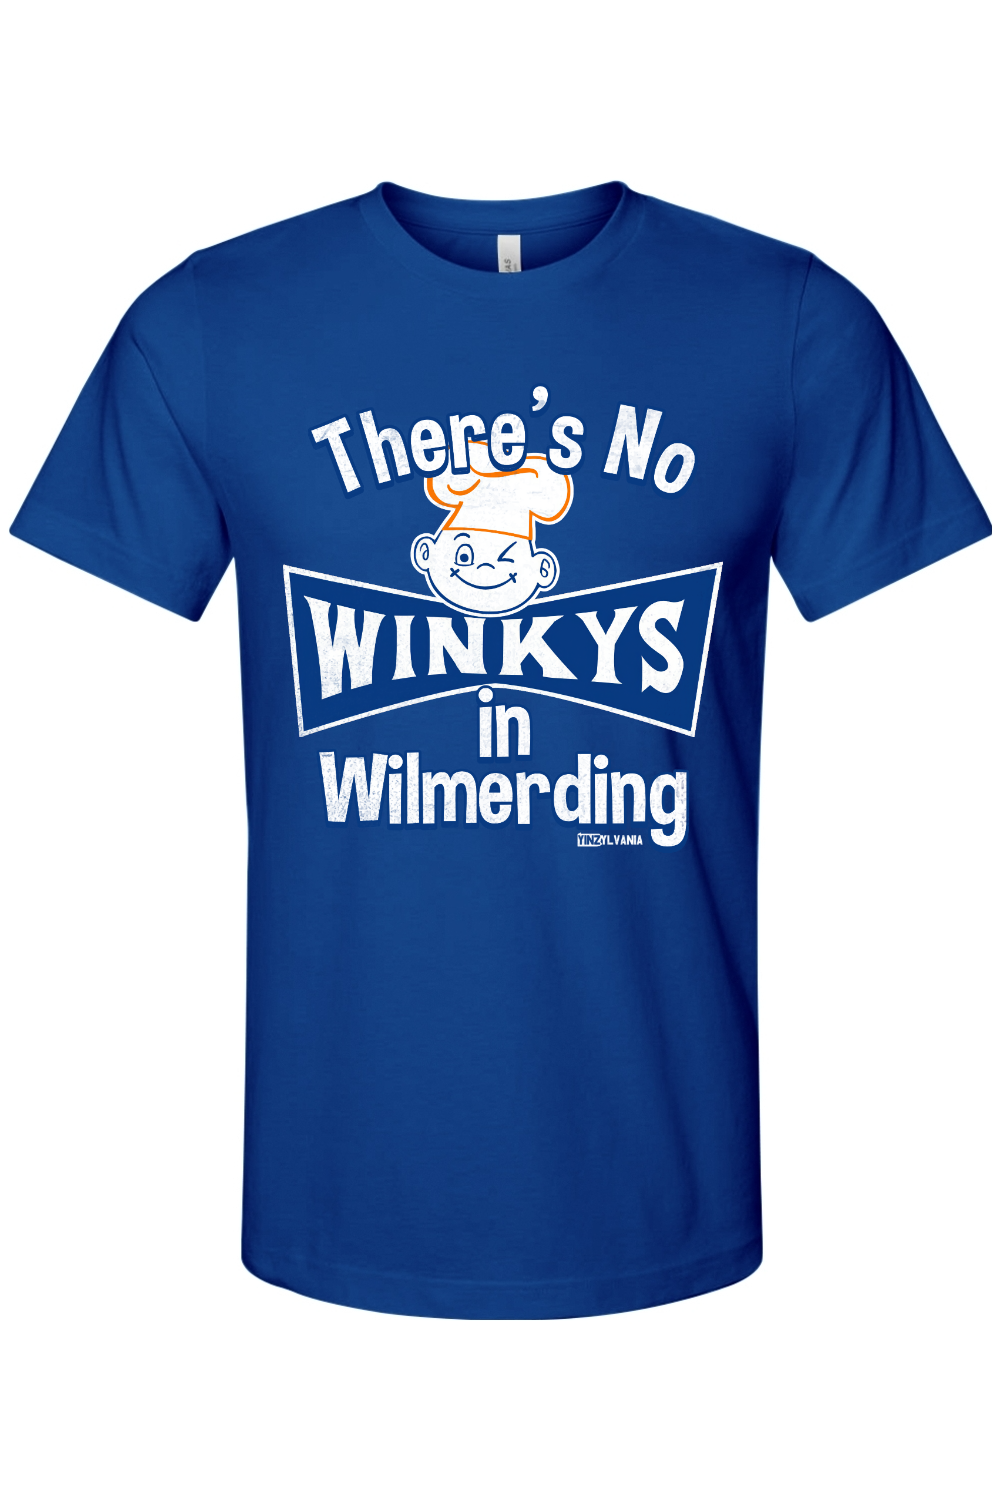 There's No Winkys in Wilmerding - Bella + Canvas Jersey Tee - Yinzylvania